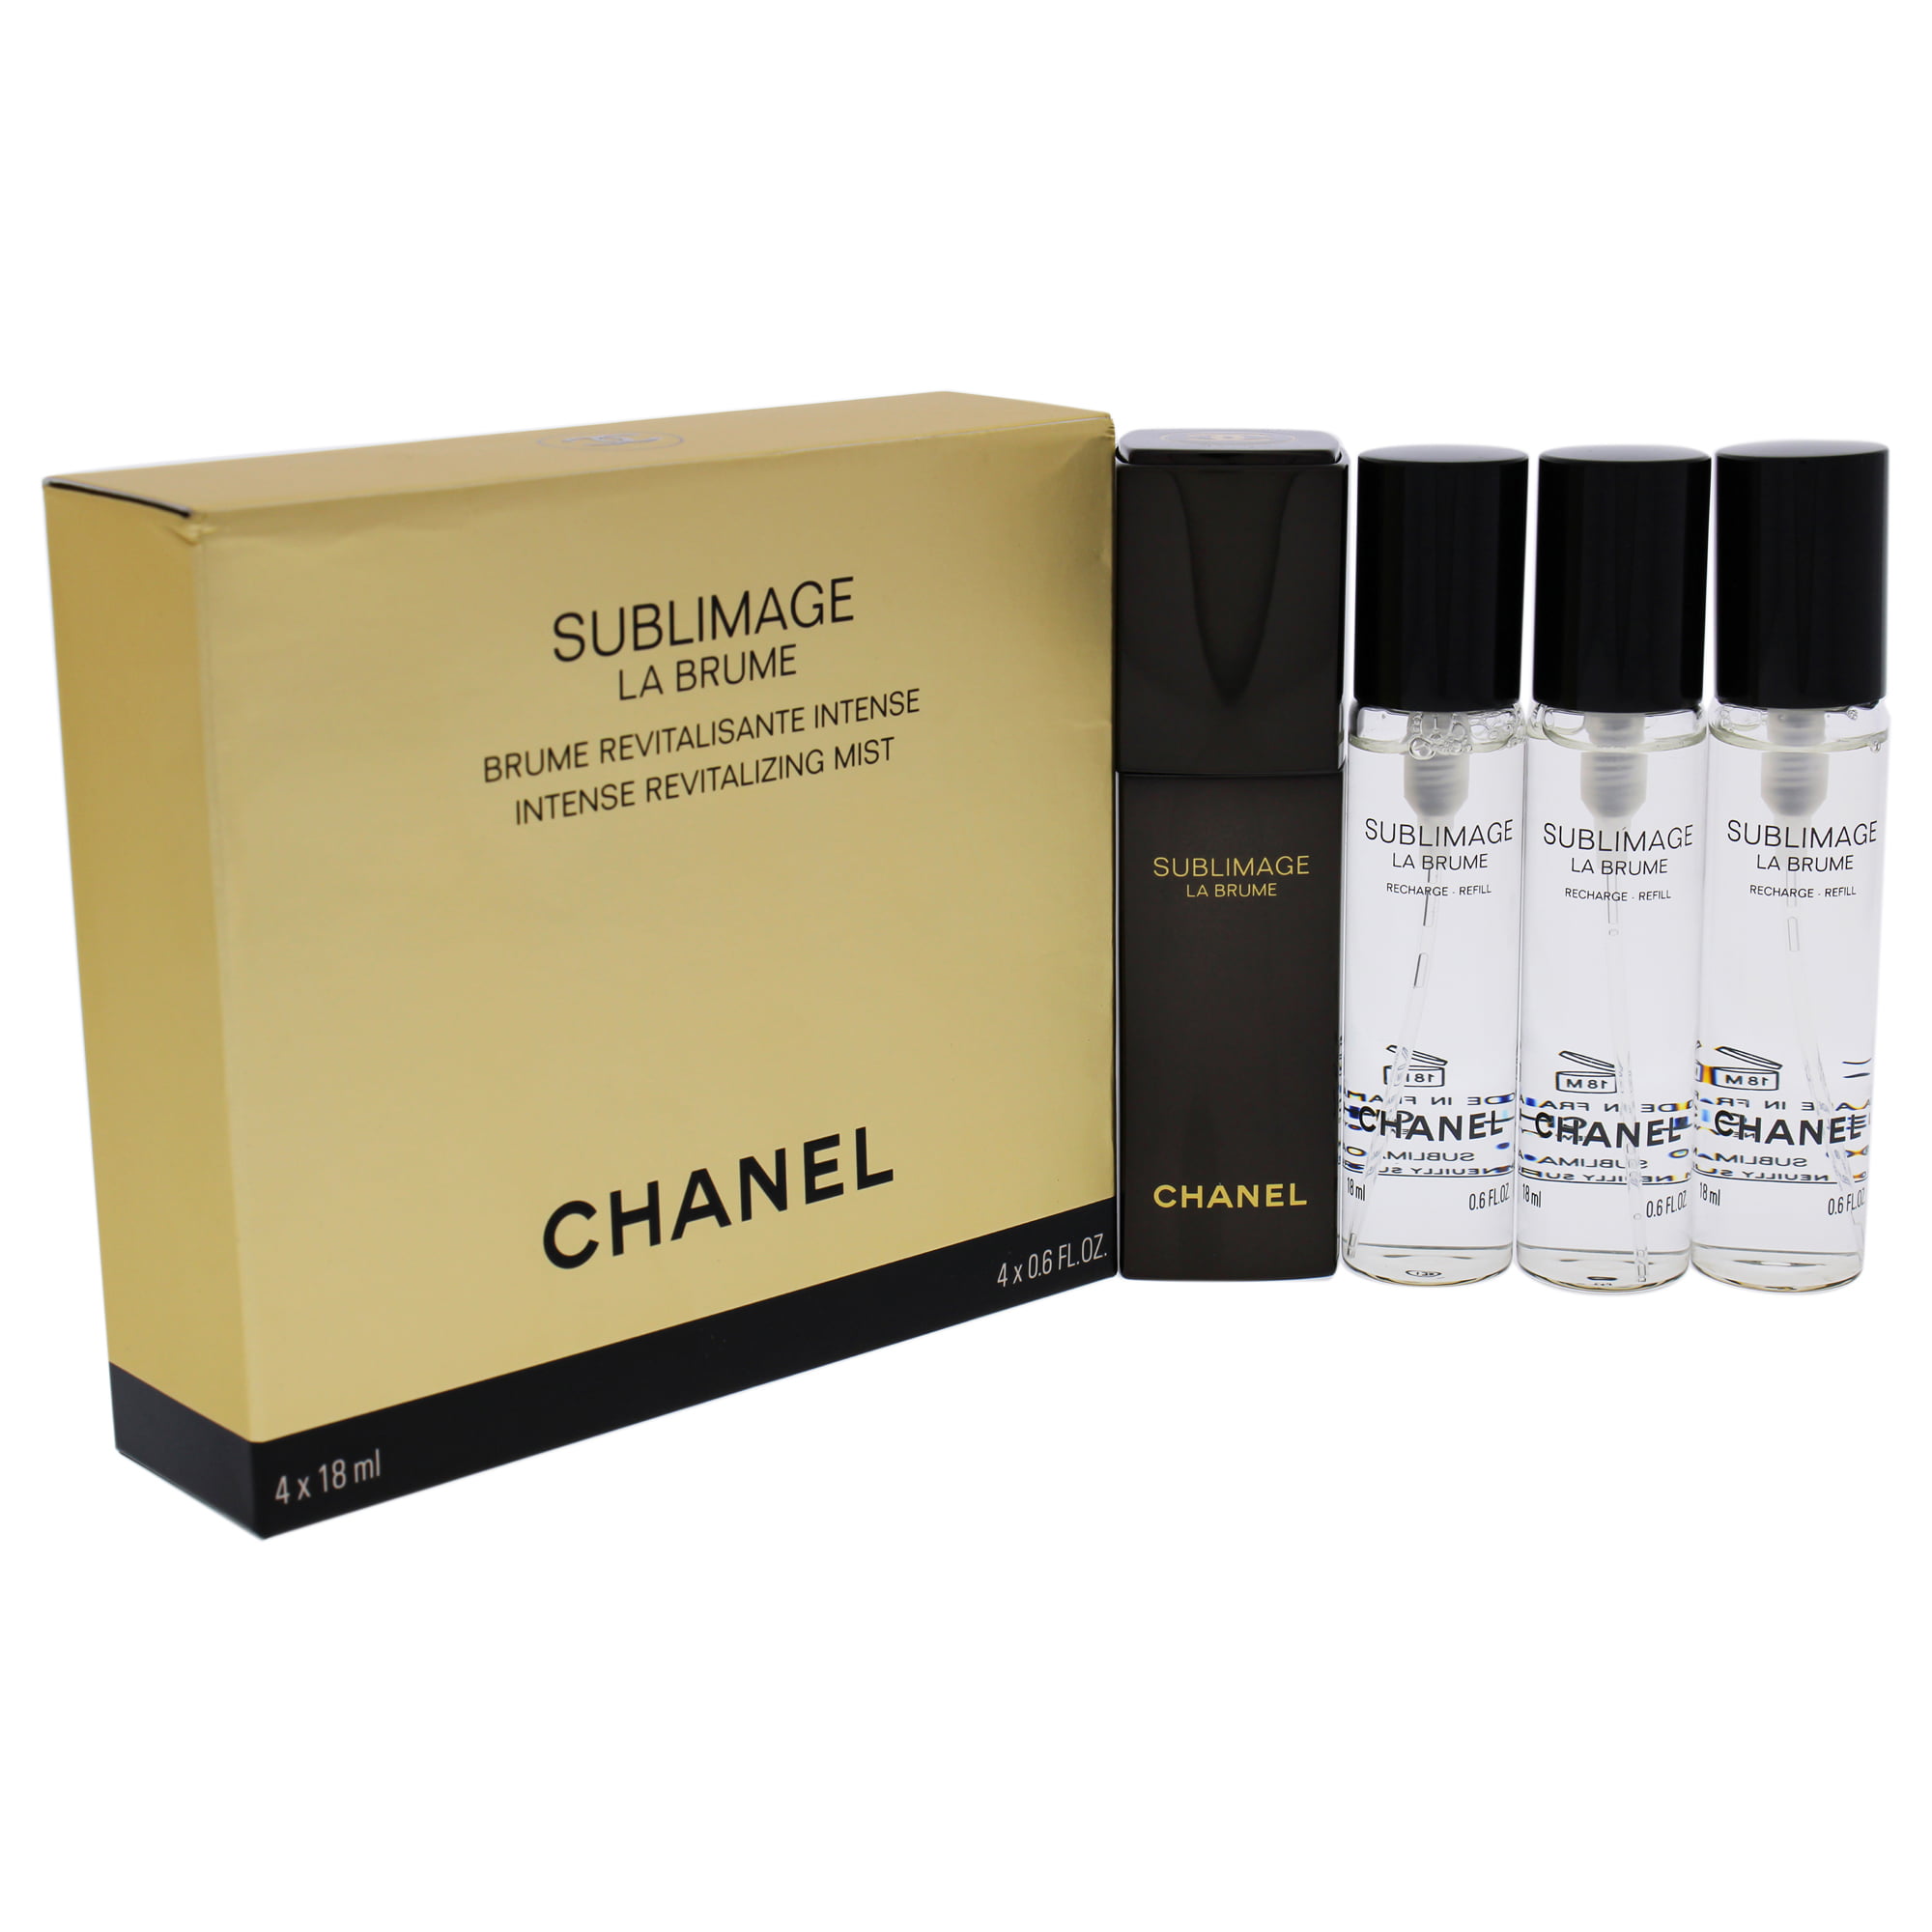 Sublimage Intense Revitalizing Mist by Chanel for Women - 4 x 0.6 oz Mist